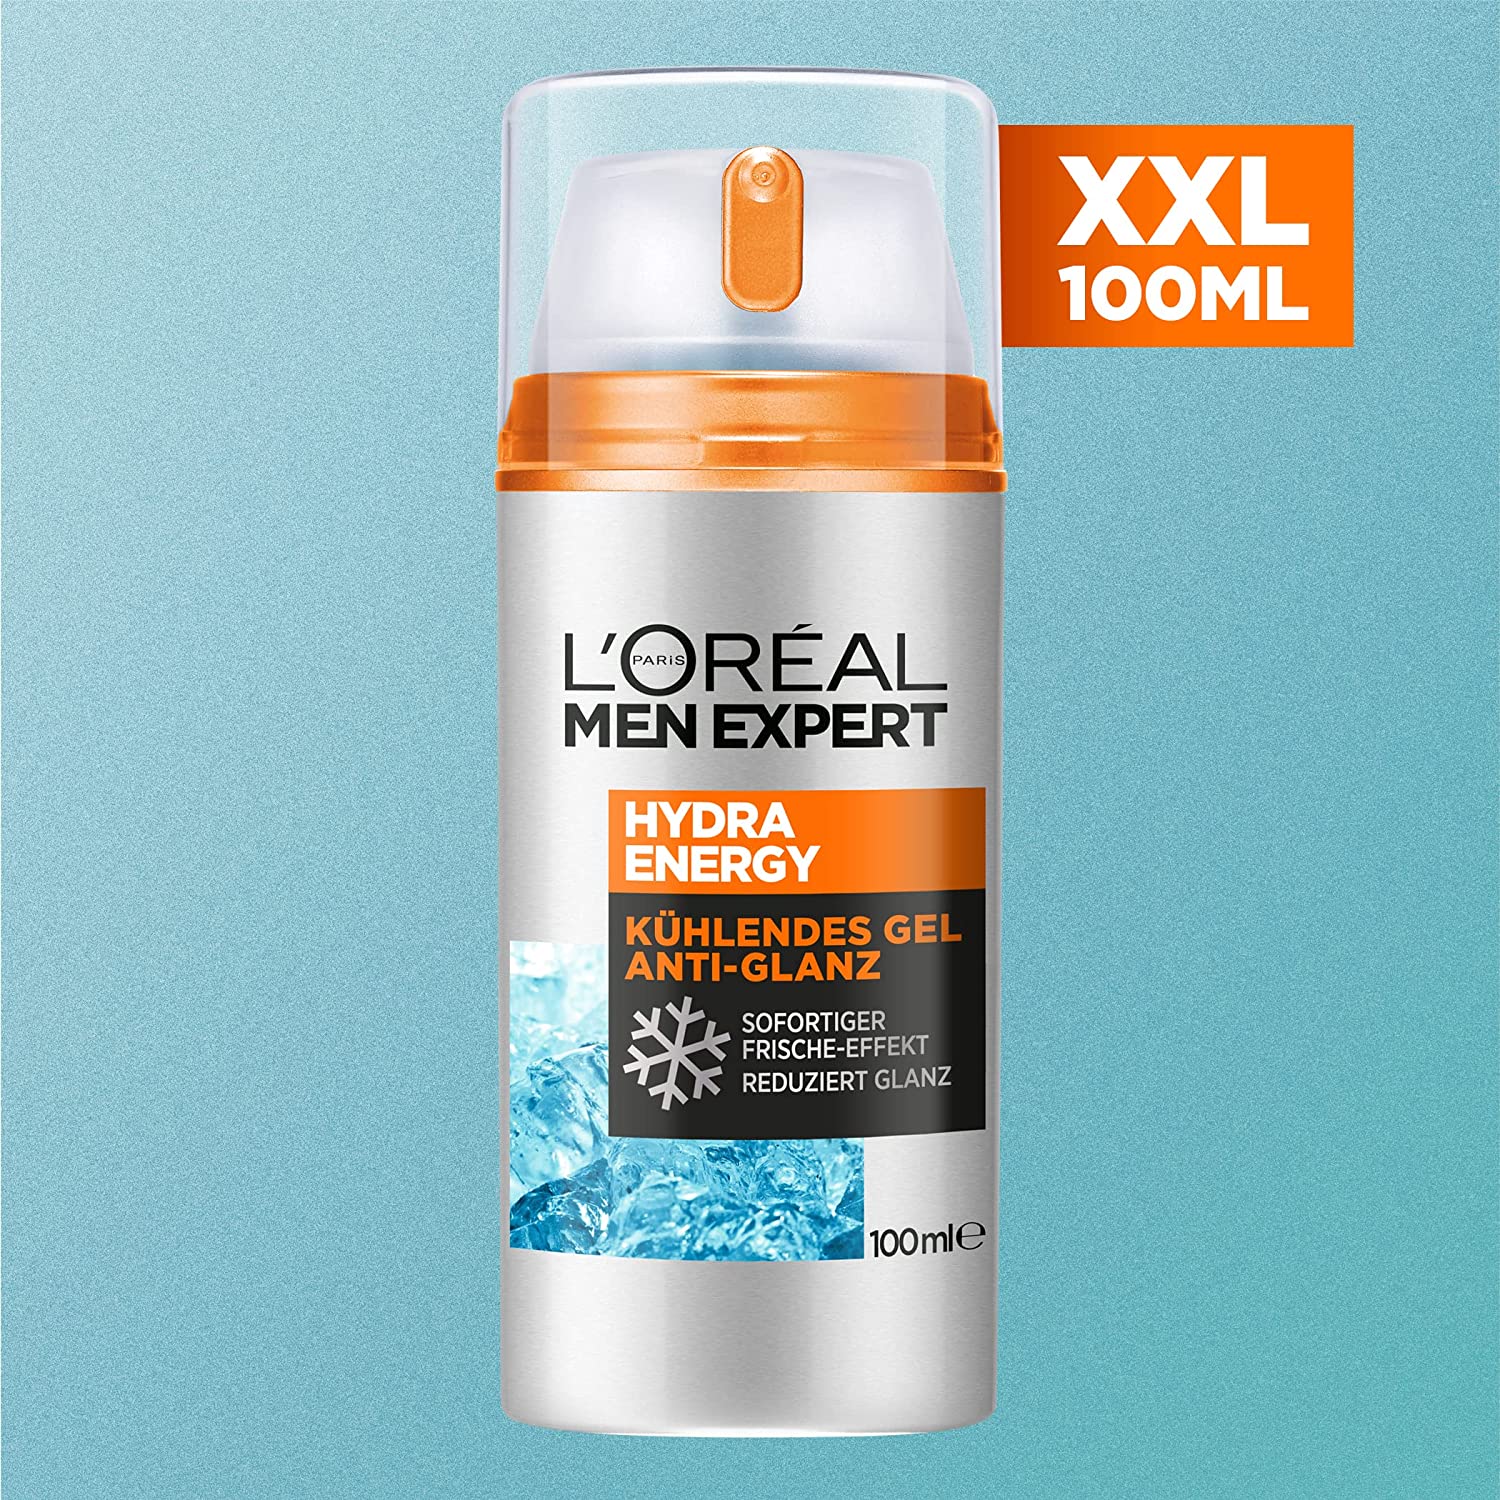 🚀 L'Oréal Men Expert Gesichtspflege Hydra Energy XXL (100 ml), kühlendes Gel für 8,94€